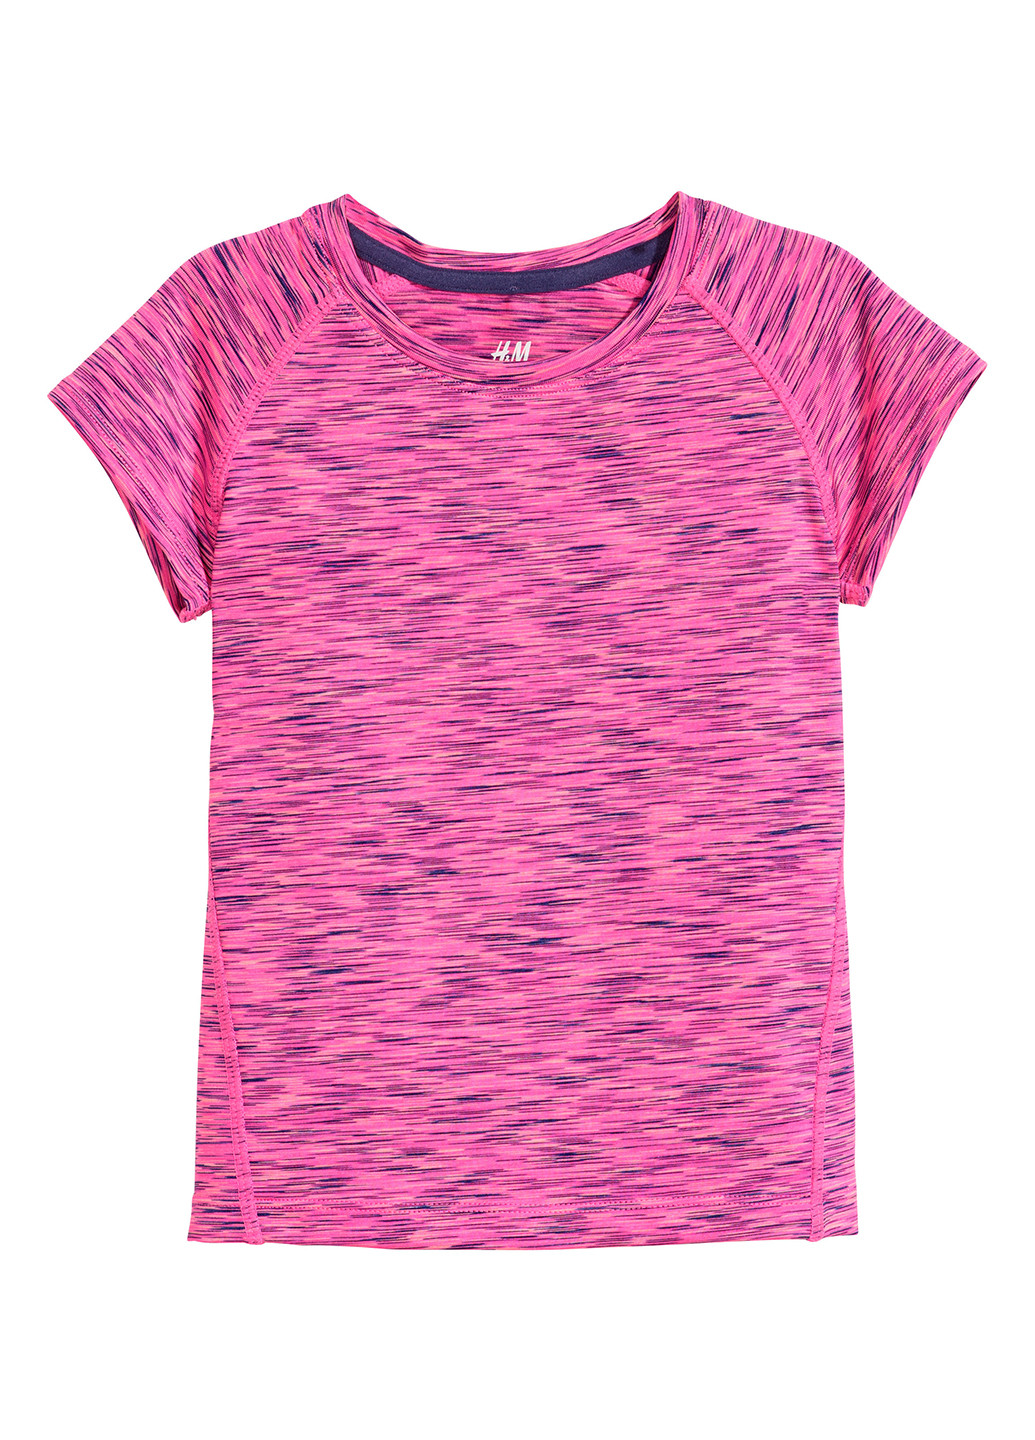 Кислотно-розовая летняя футболка H&M